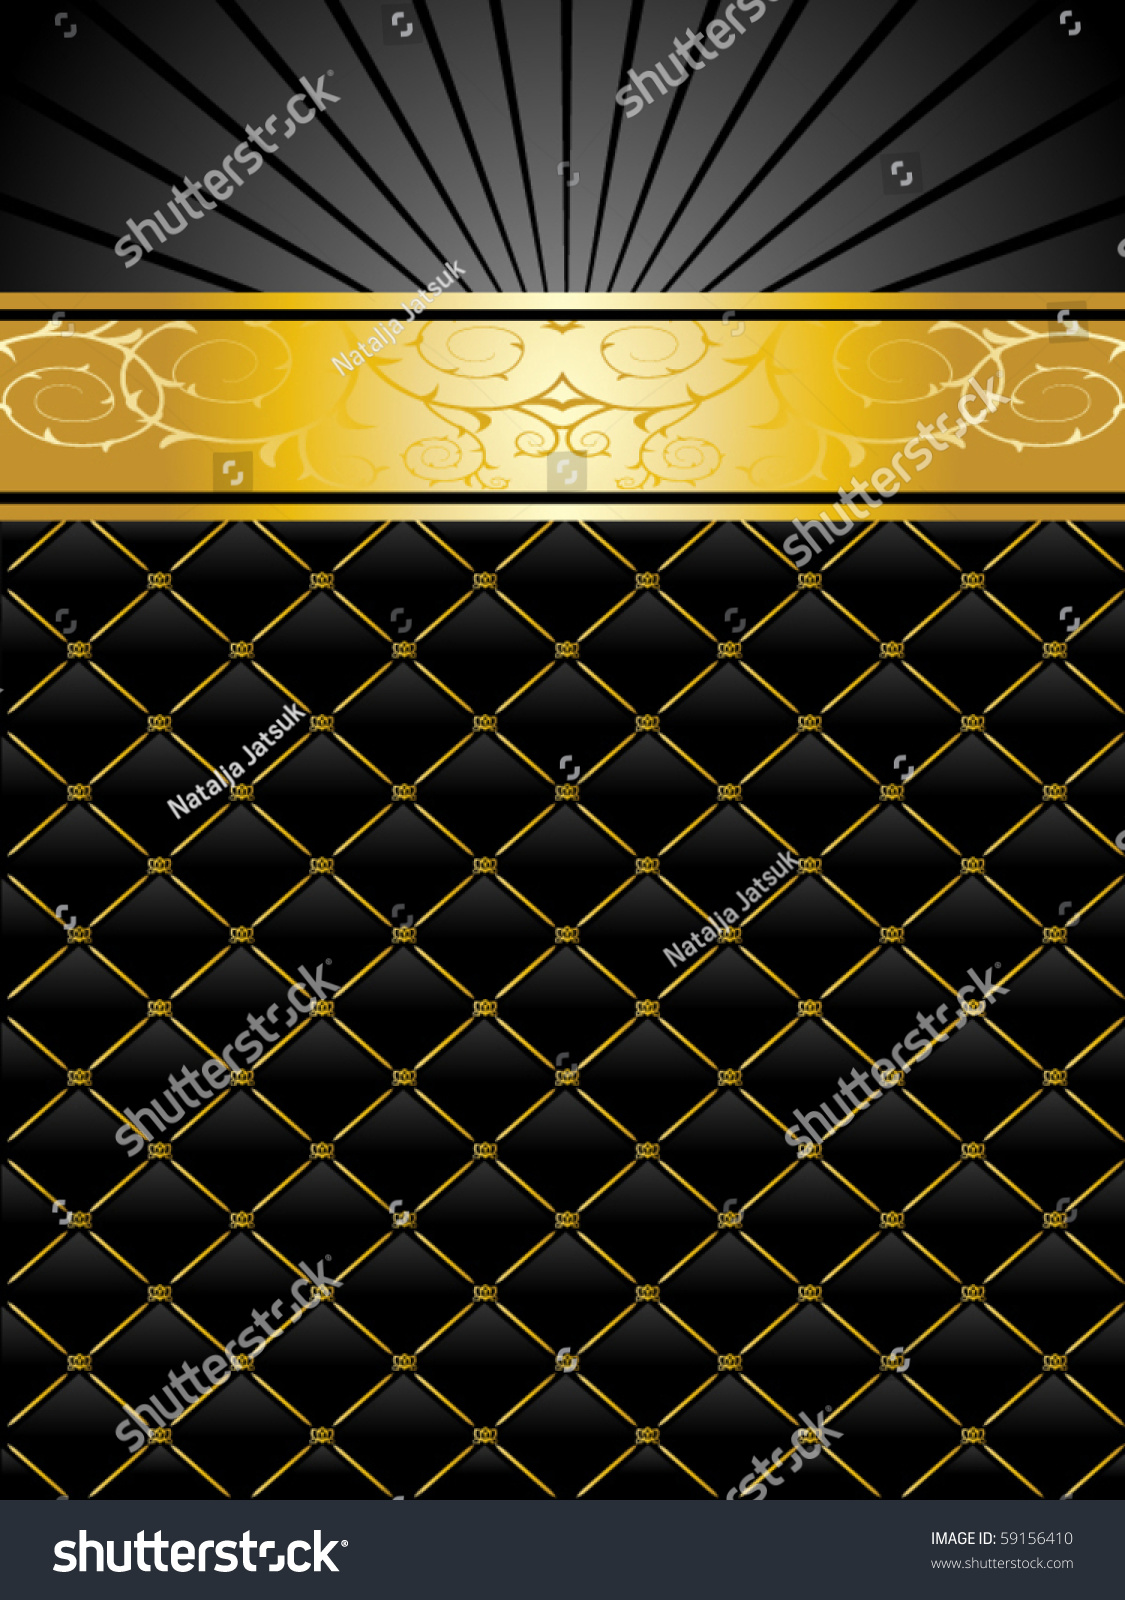 Elegant Vector Black And Gold Background - 59156410 : Shutterstock